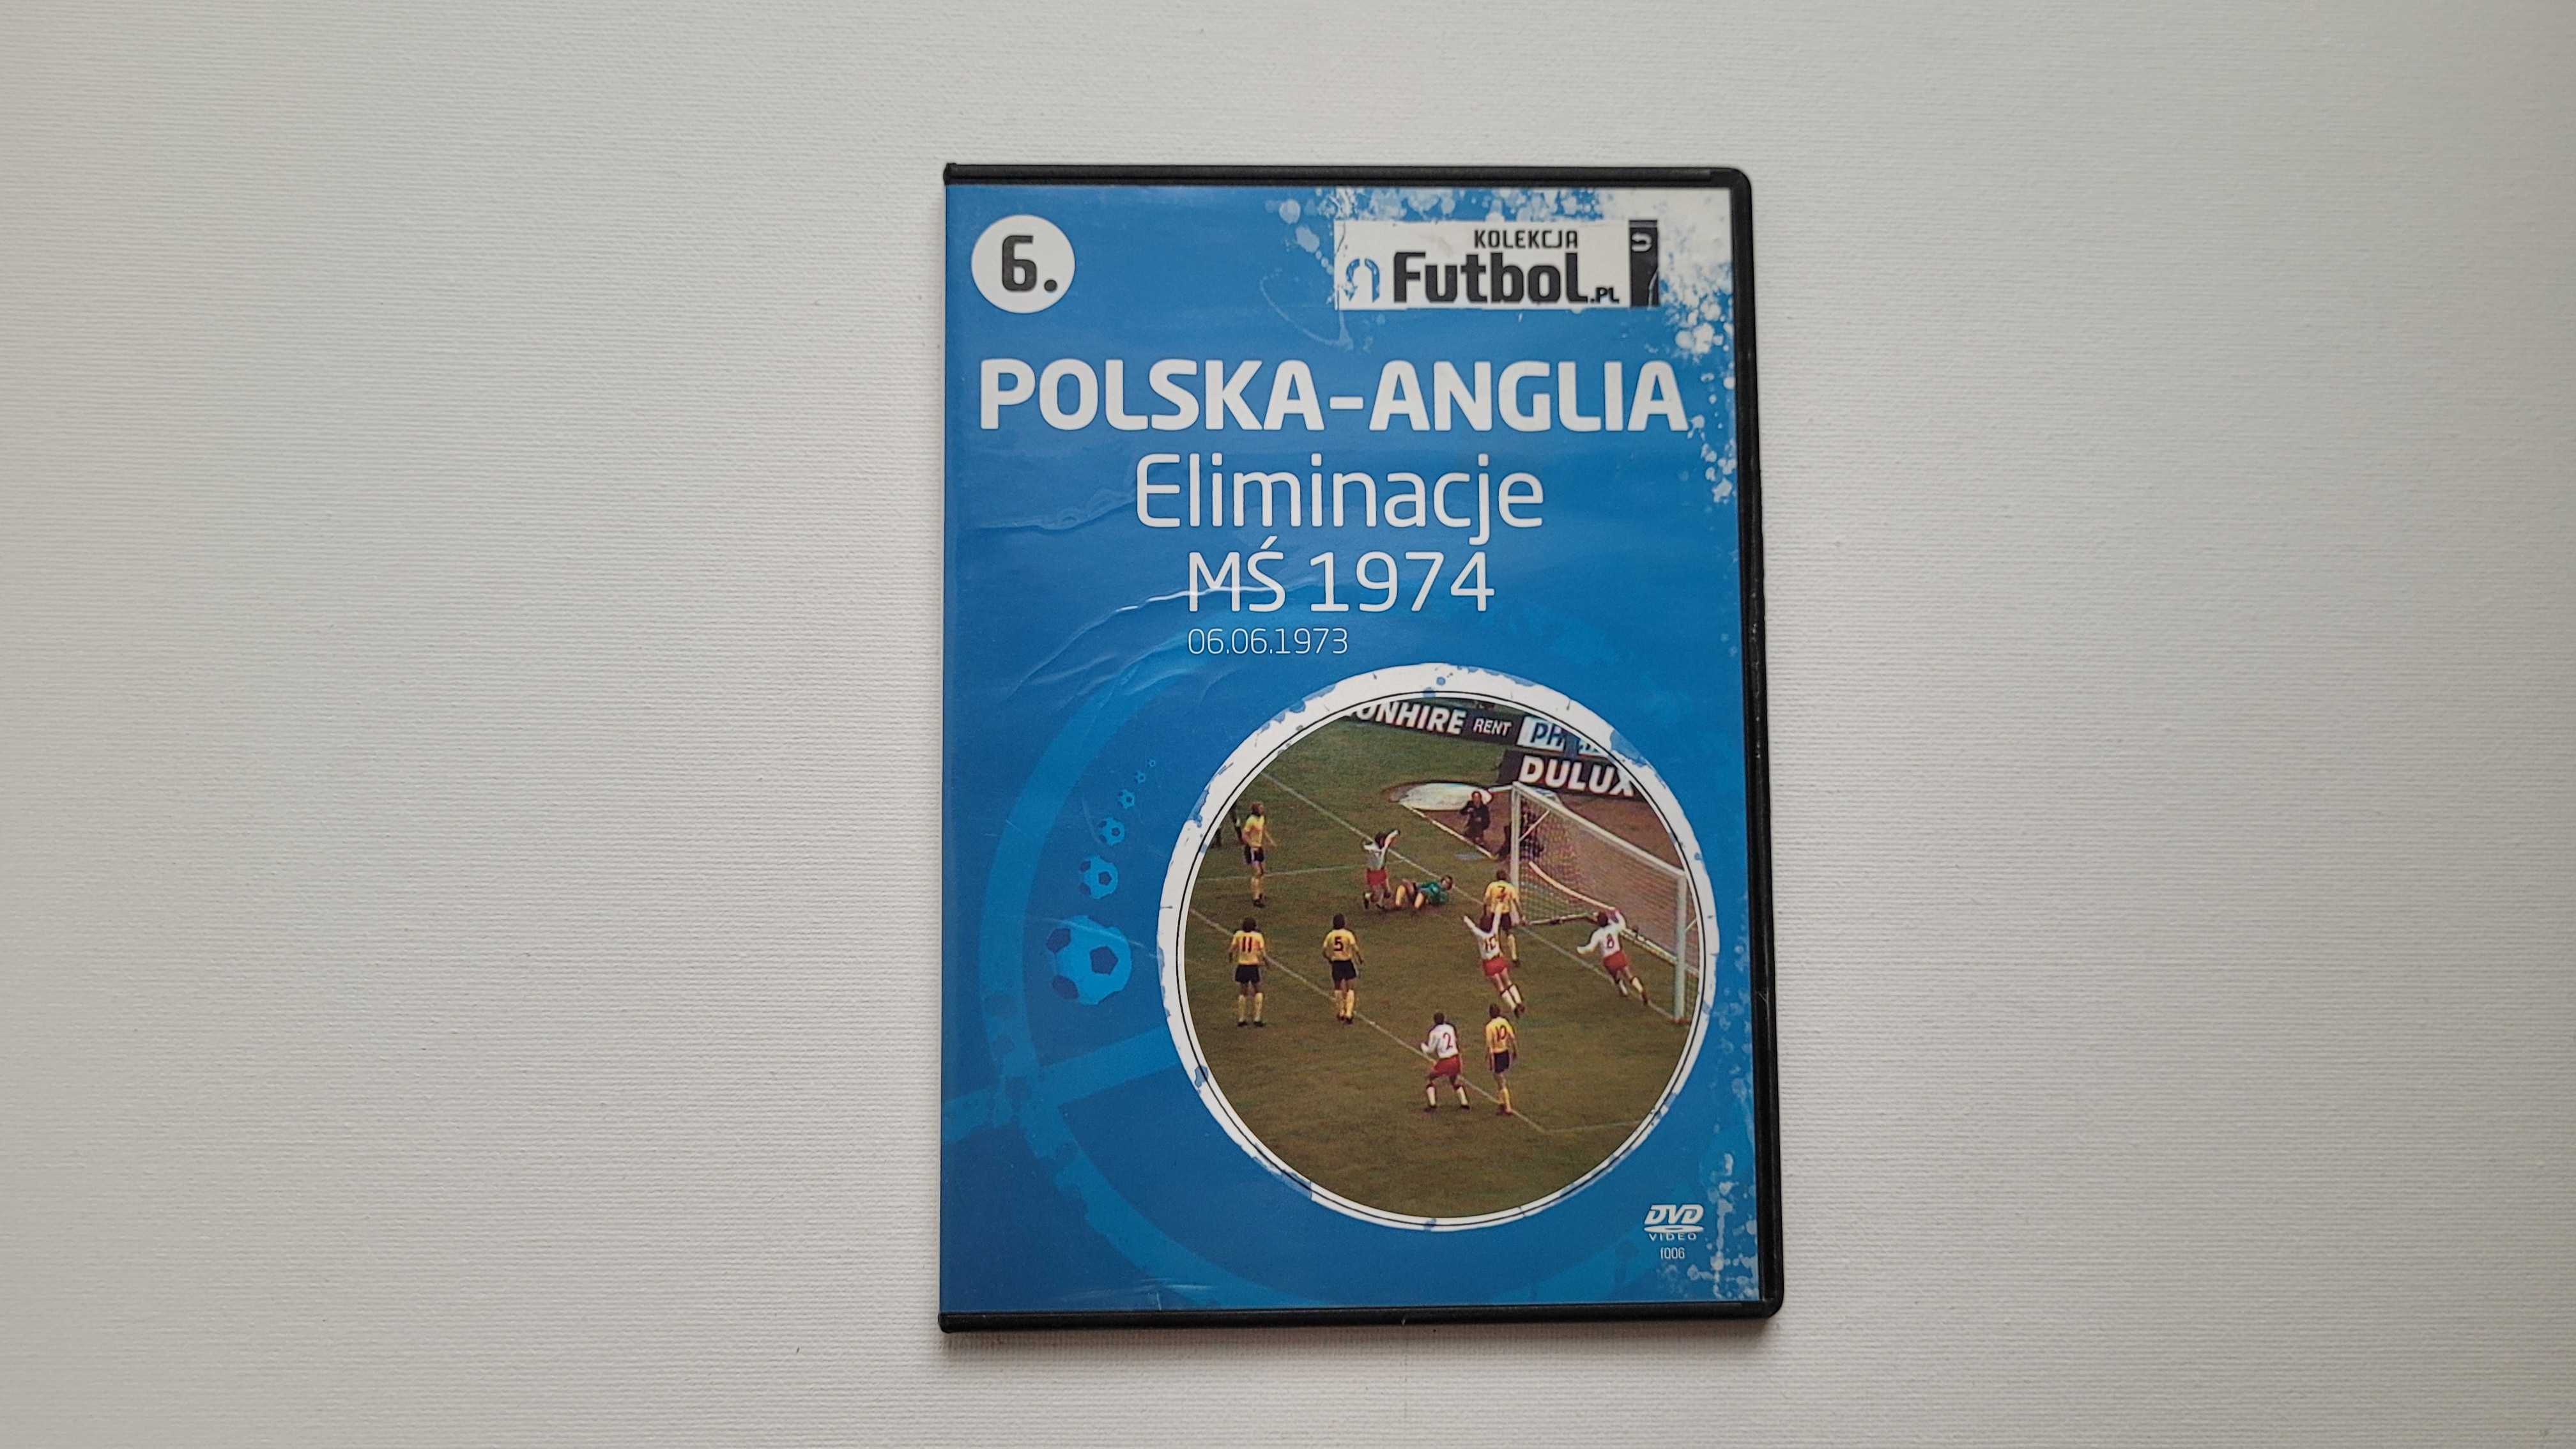 Polska-Anglia, Eliminacje MŚ 1974, Kolekcja Futbol pl